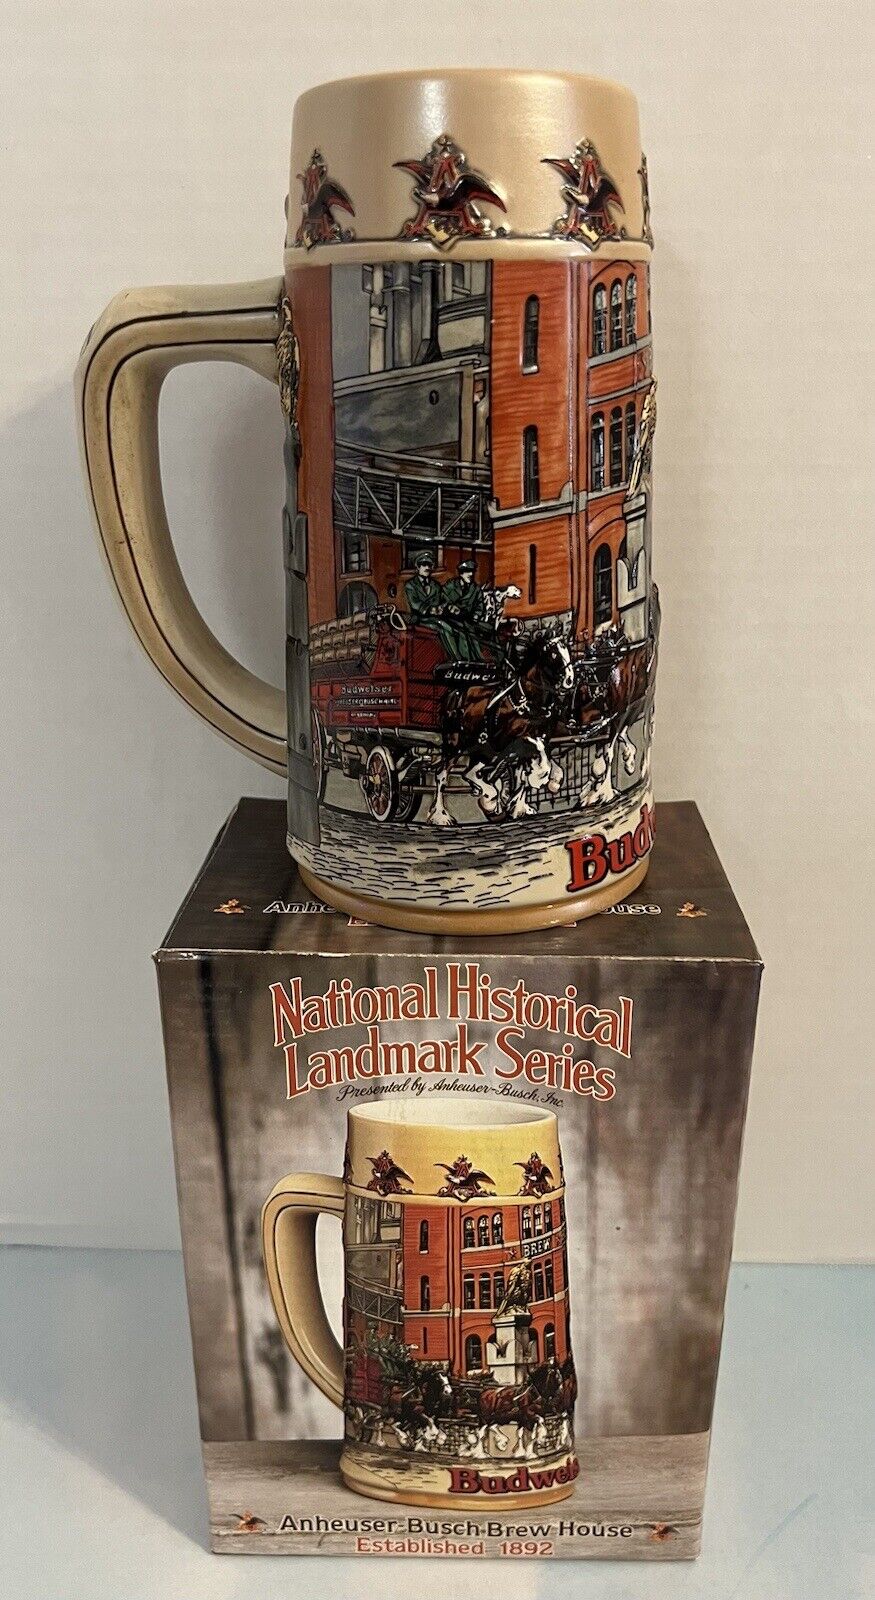 Budweiser National Historical Landmark Series: Anheuser-Busch Brew House Stein